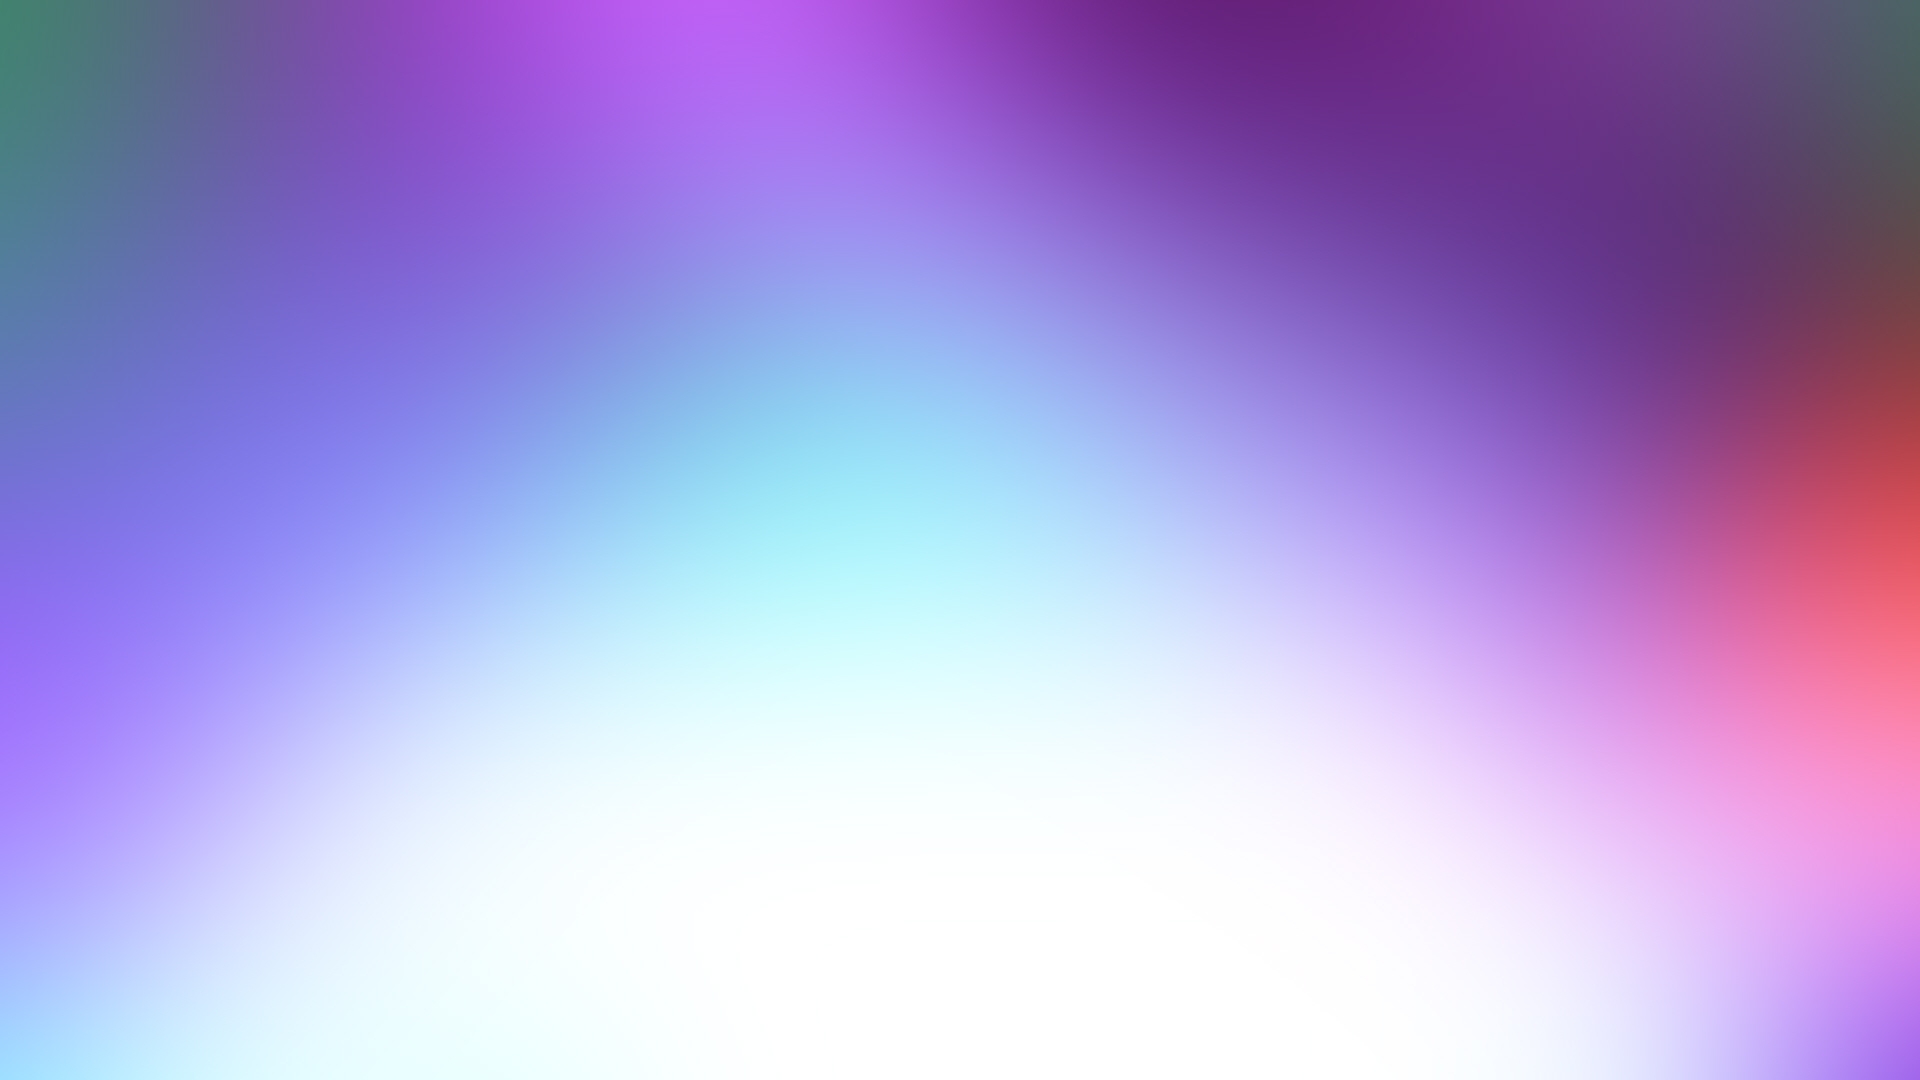 Free download Download Wallpaper 1920x1080 Purple Blue White Spot  [1920x1080] for your Desktop, Mobile & Tablet | Explore 74+ 1080p Hd  Backgrounds | Hd 1080p Backgrounds, Hd 1080p Wallpapers, 1080p Hd Wallpaper